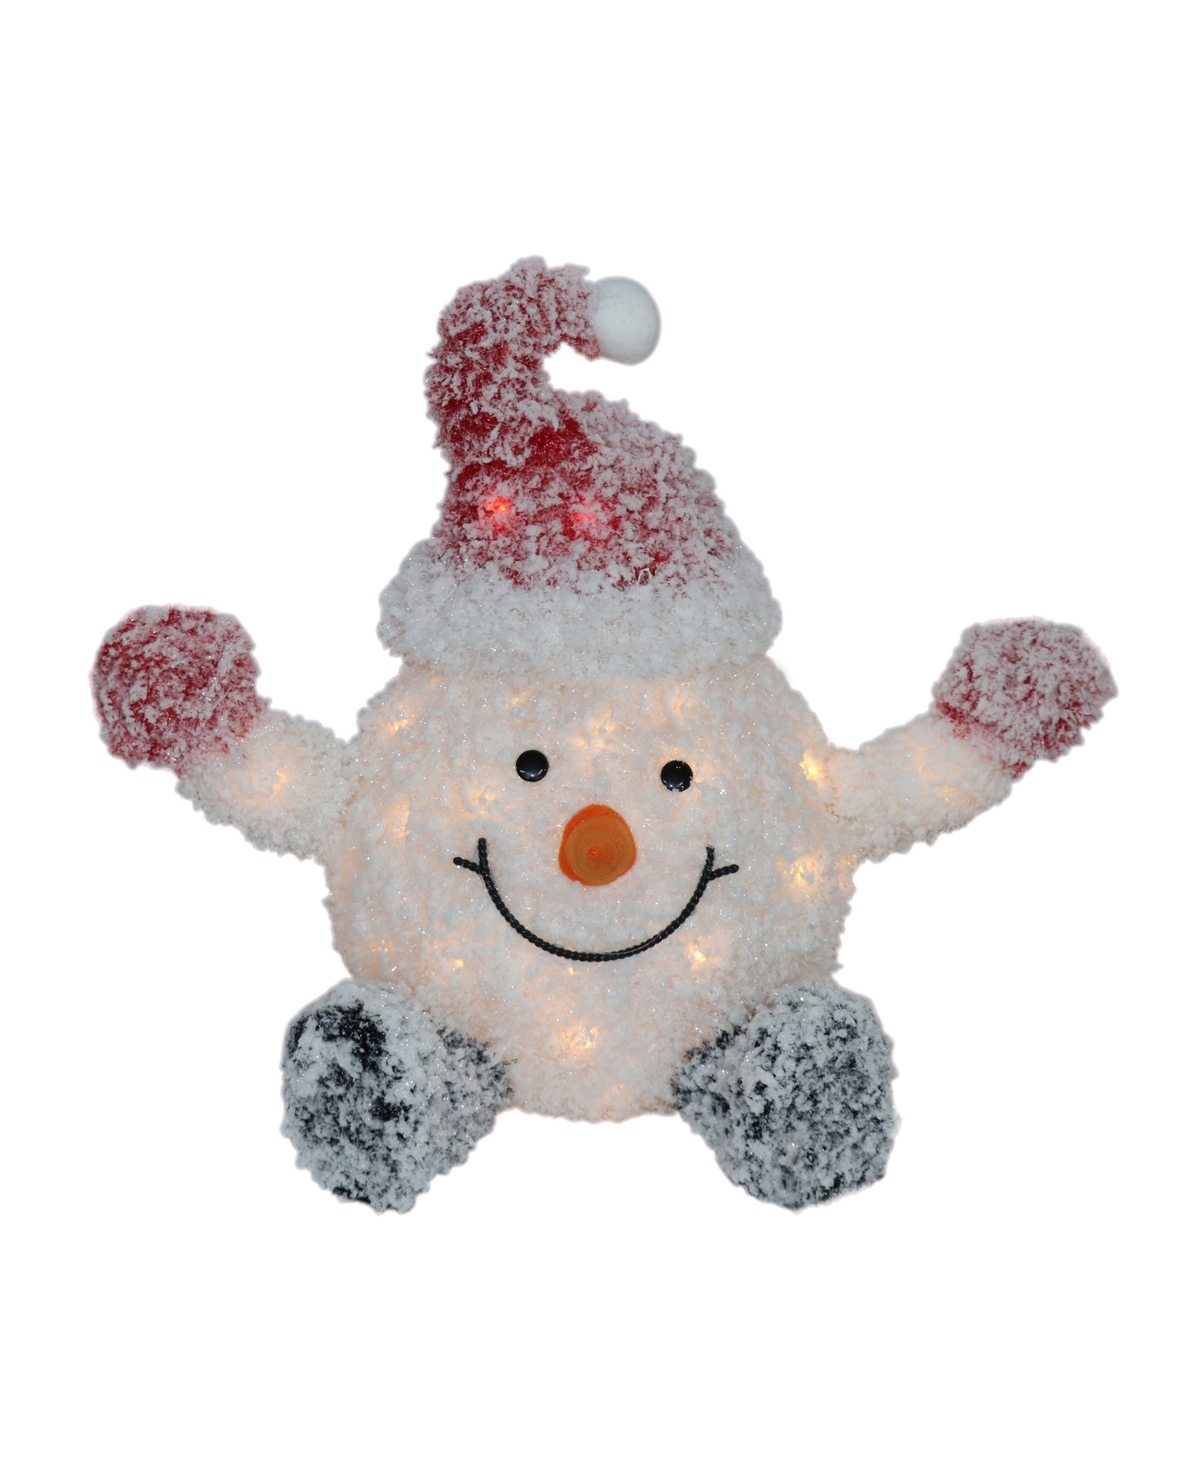 Seasonal Snow Baby With Santa Hat Pre-lit In Multi